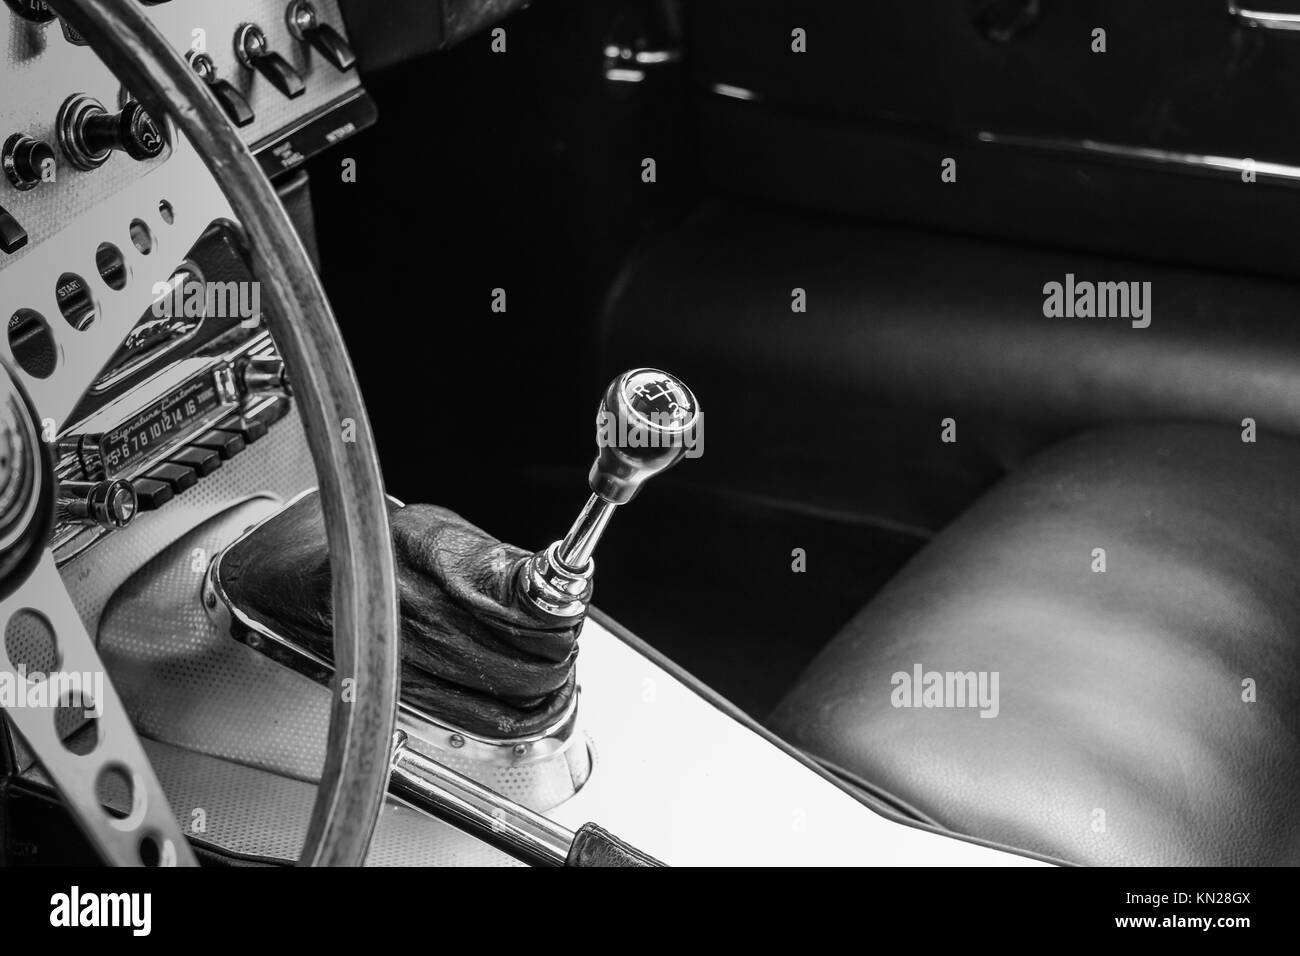 Driver's cockpit of a classic car. Gear Box Stock Photo